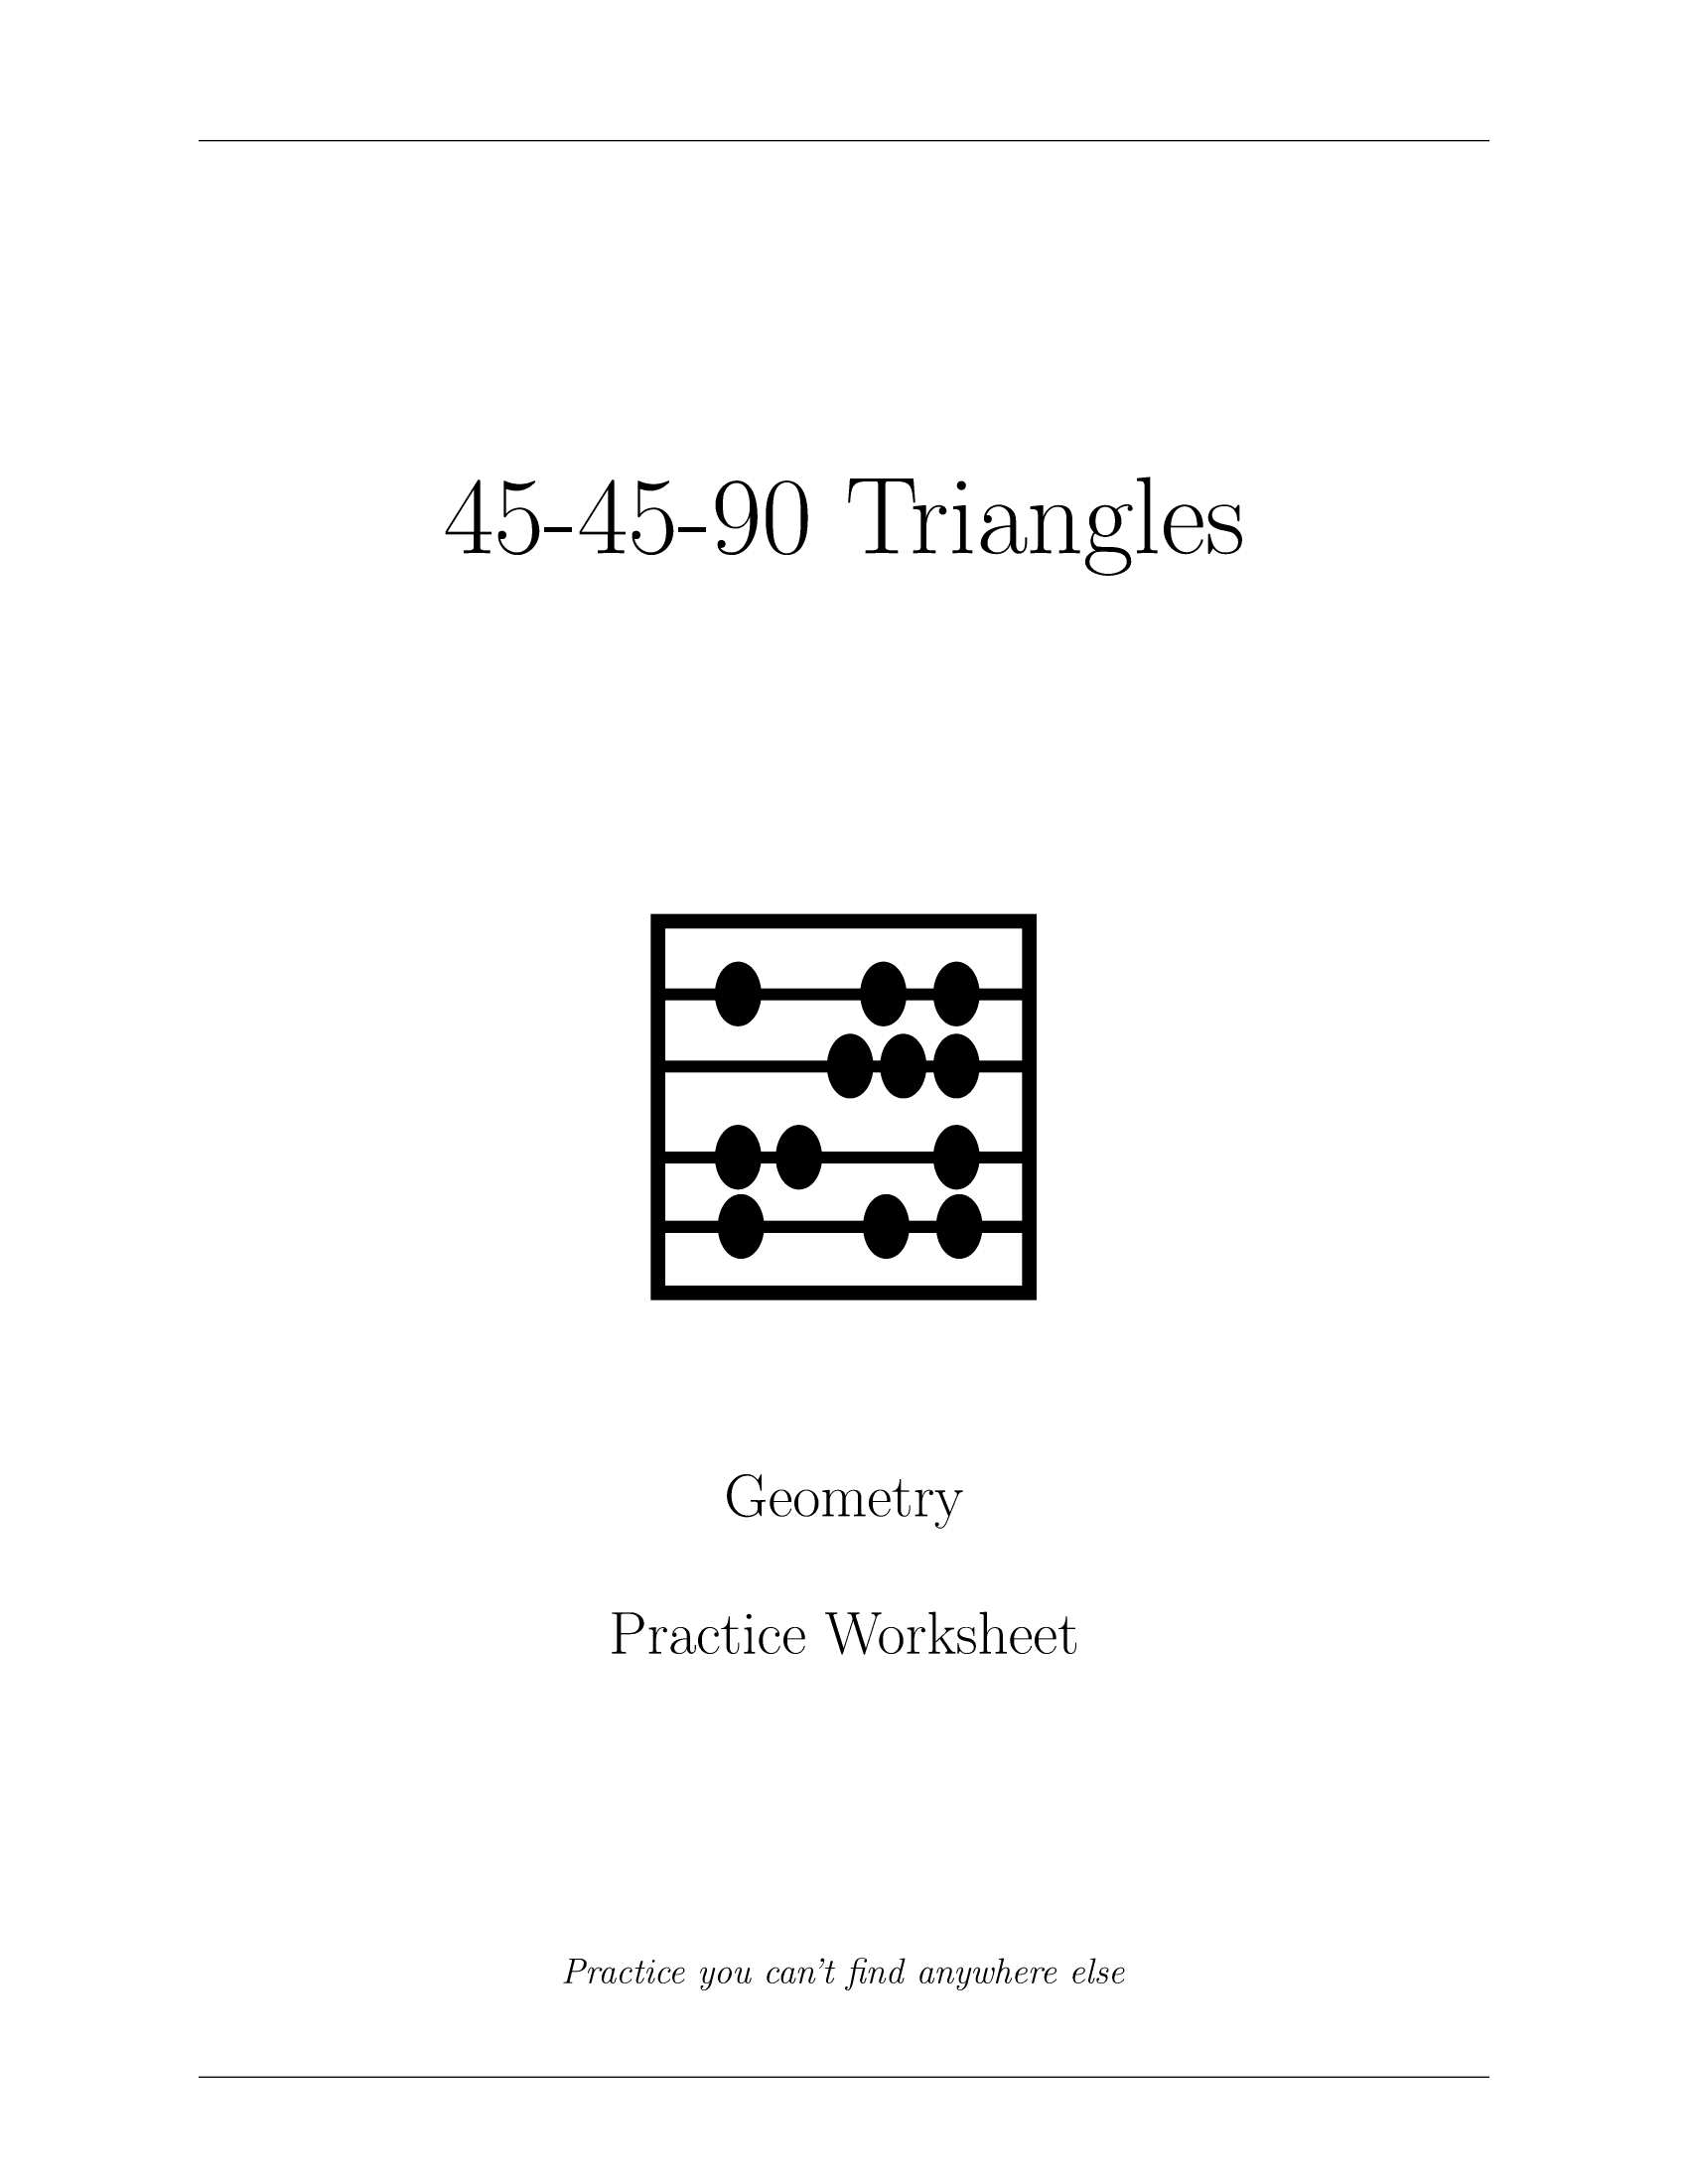 45-45-90 Triangles Worksheet_1